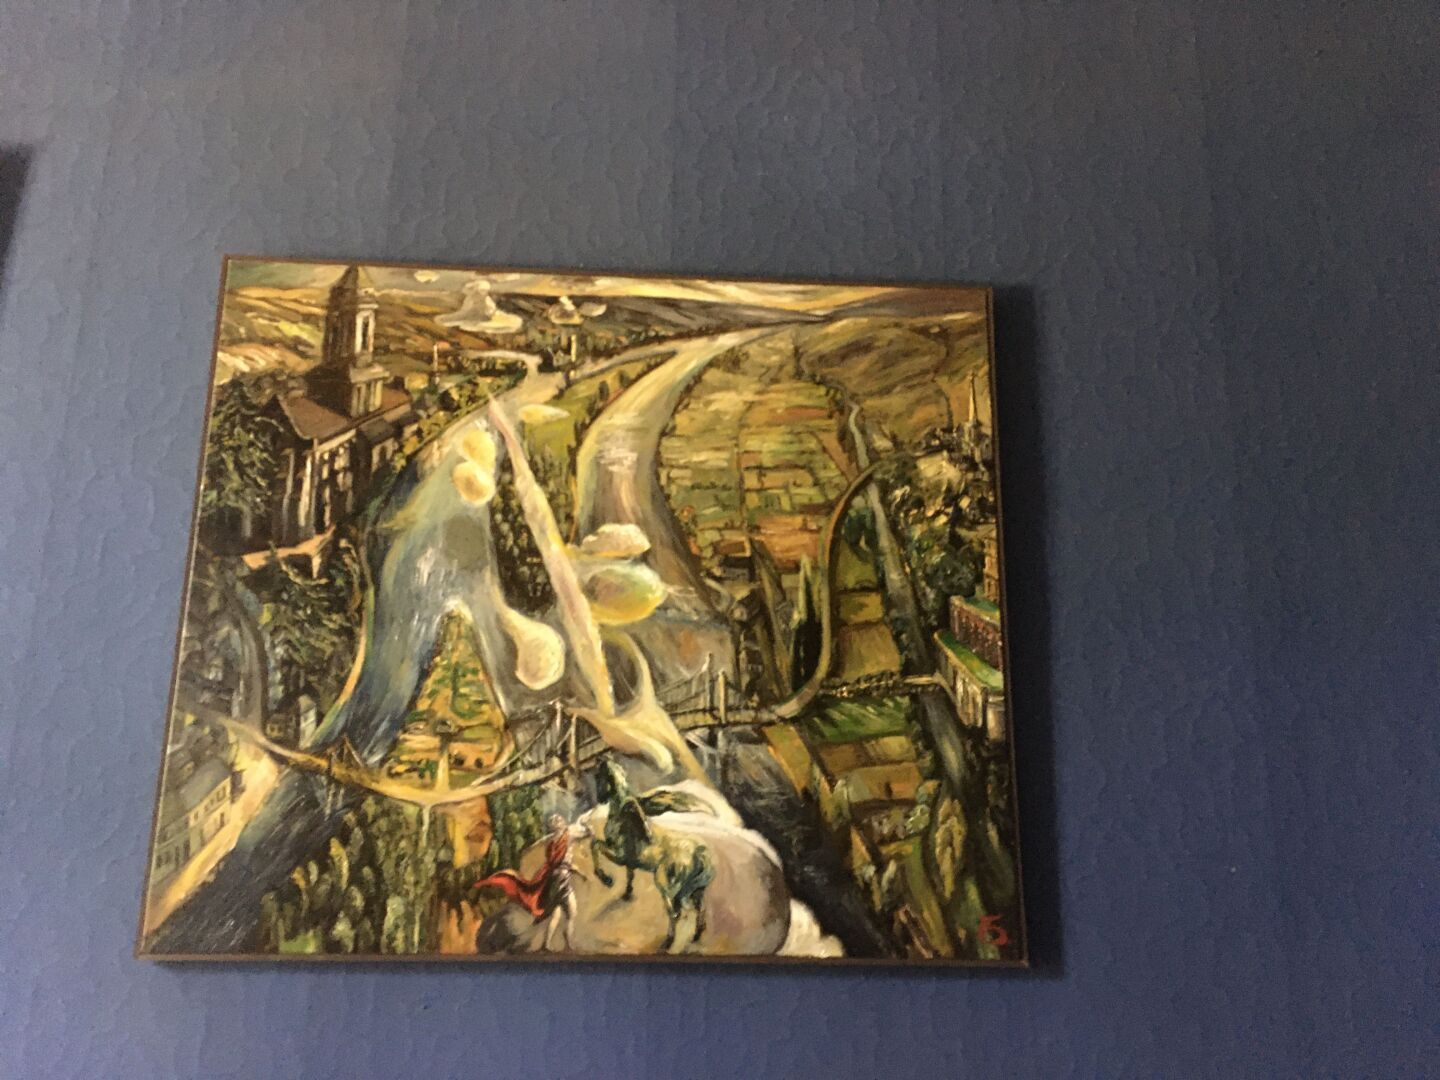 Null 弗朗索瓦-德沃热

飞马与卢瓦尔河

布面油画

107x125厘米